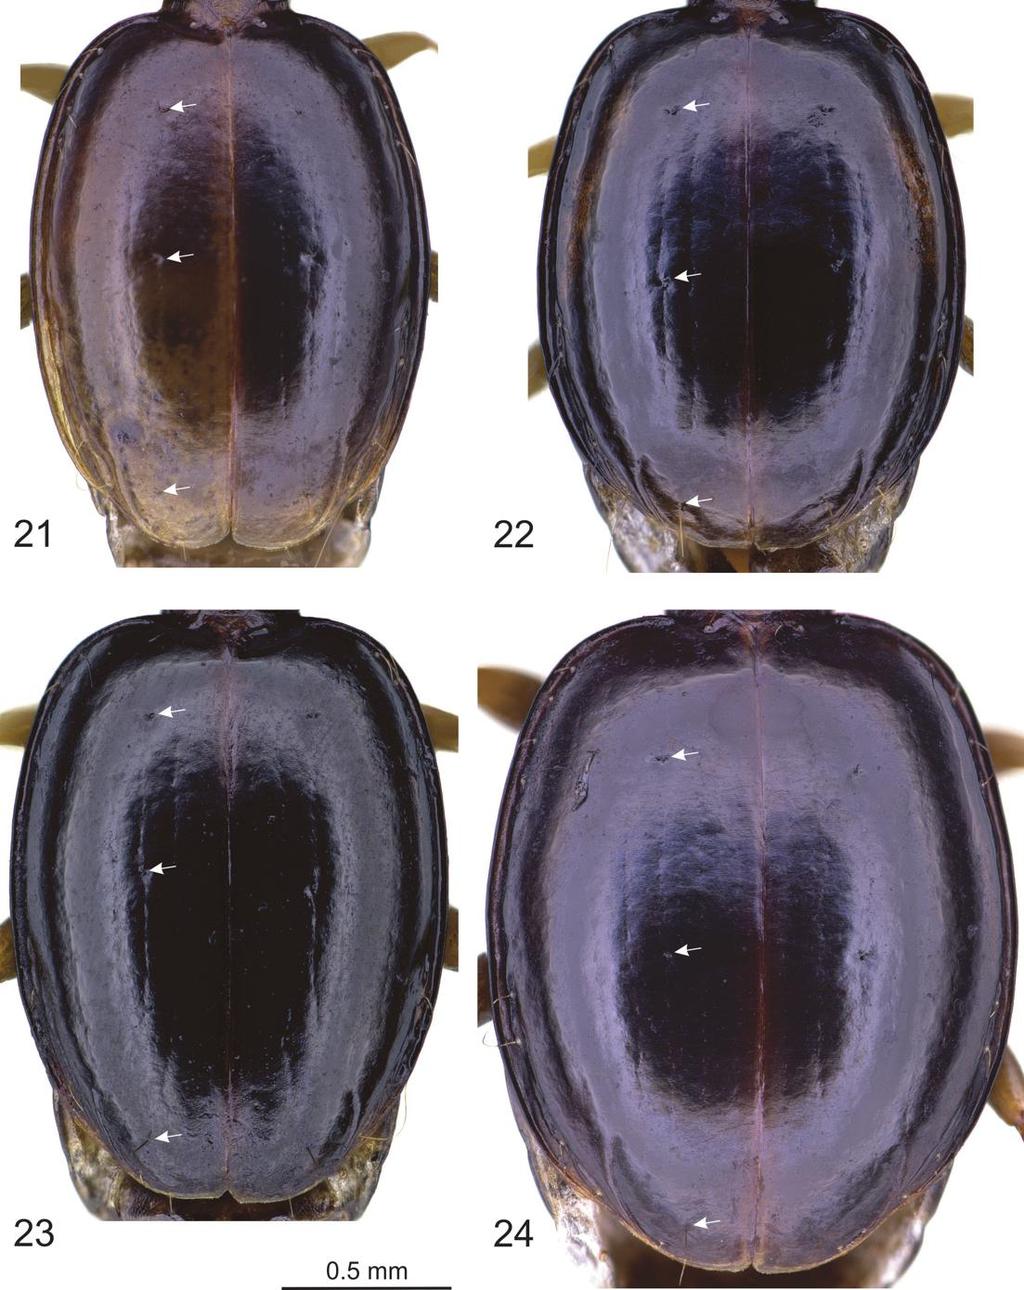 European Journal of Taxonomy 446: 1 82 (2018) Figs 21 24. Trechus spp., elytra. 21. T. rira sp. nov., holotype. 22. T. iridescens sp. nov., holotype. 23.